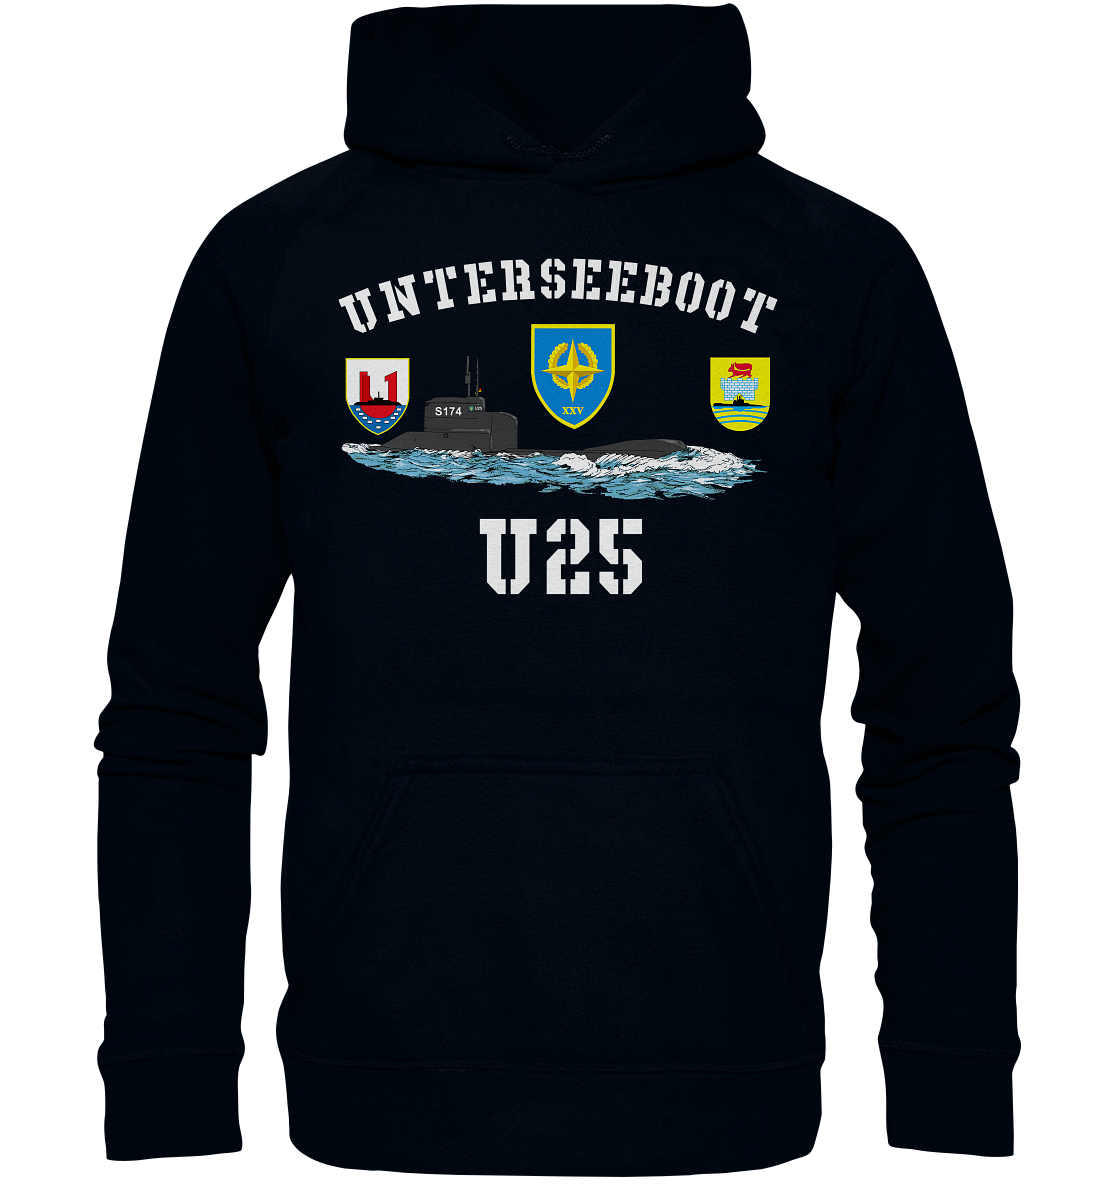 Unterseeboot U25 - Basic Unisex Hoodie XL